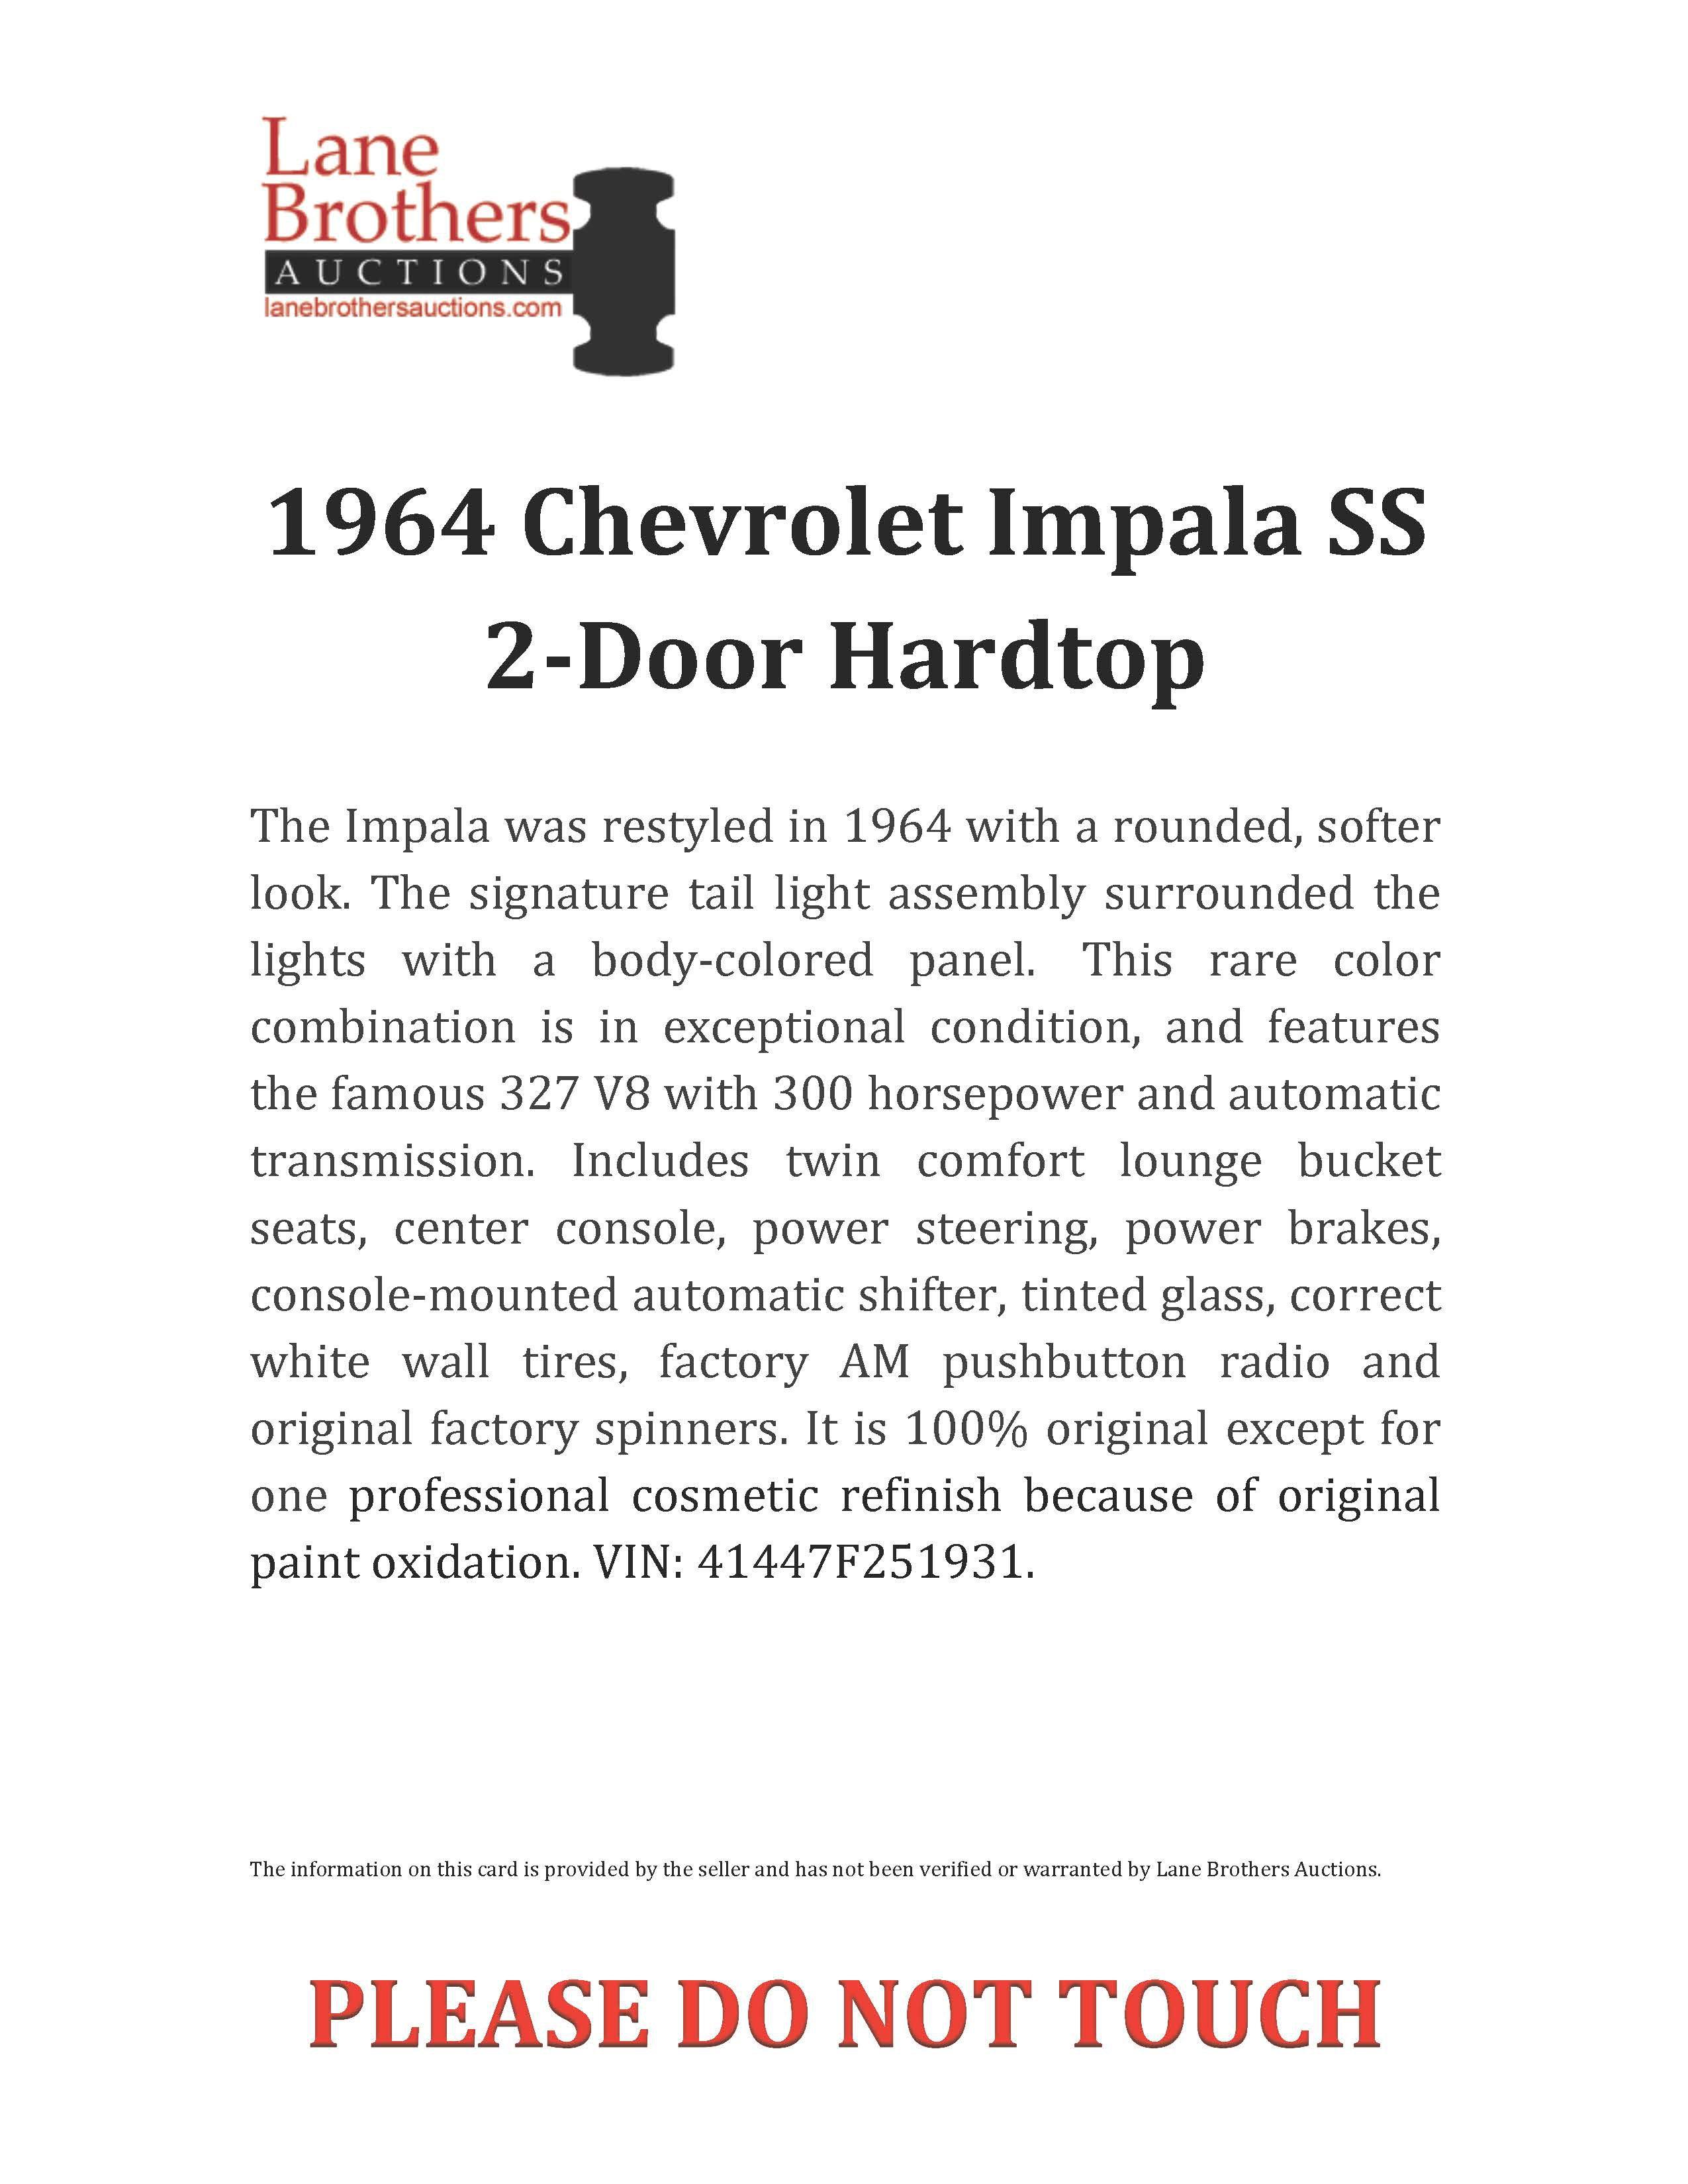 1964 CHEVROLET IMPALA SS,